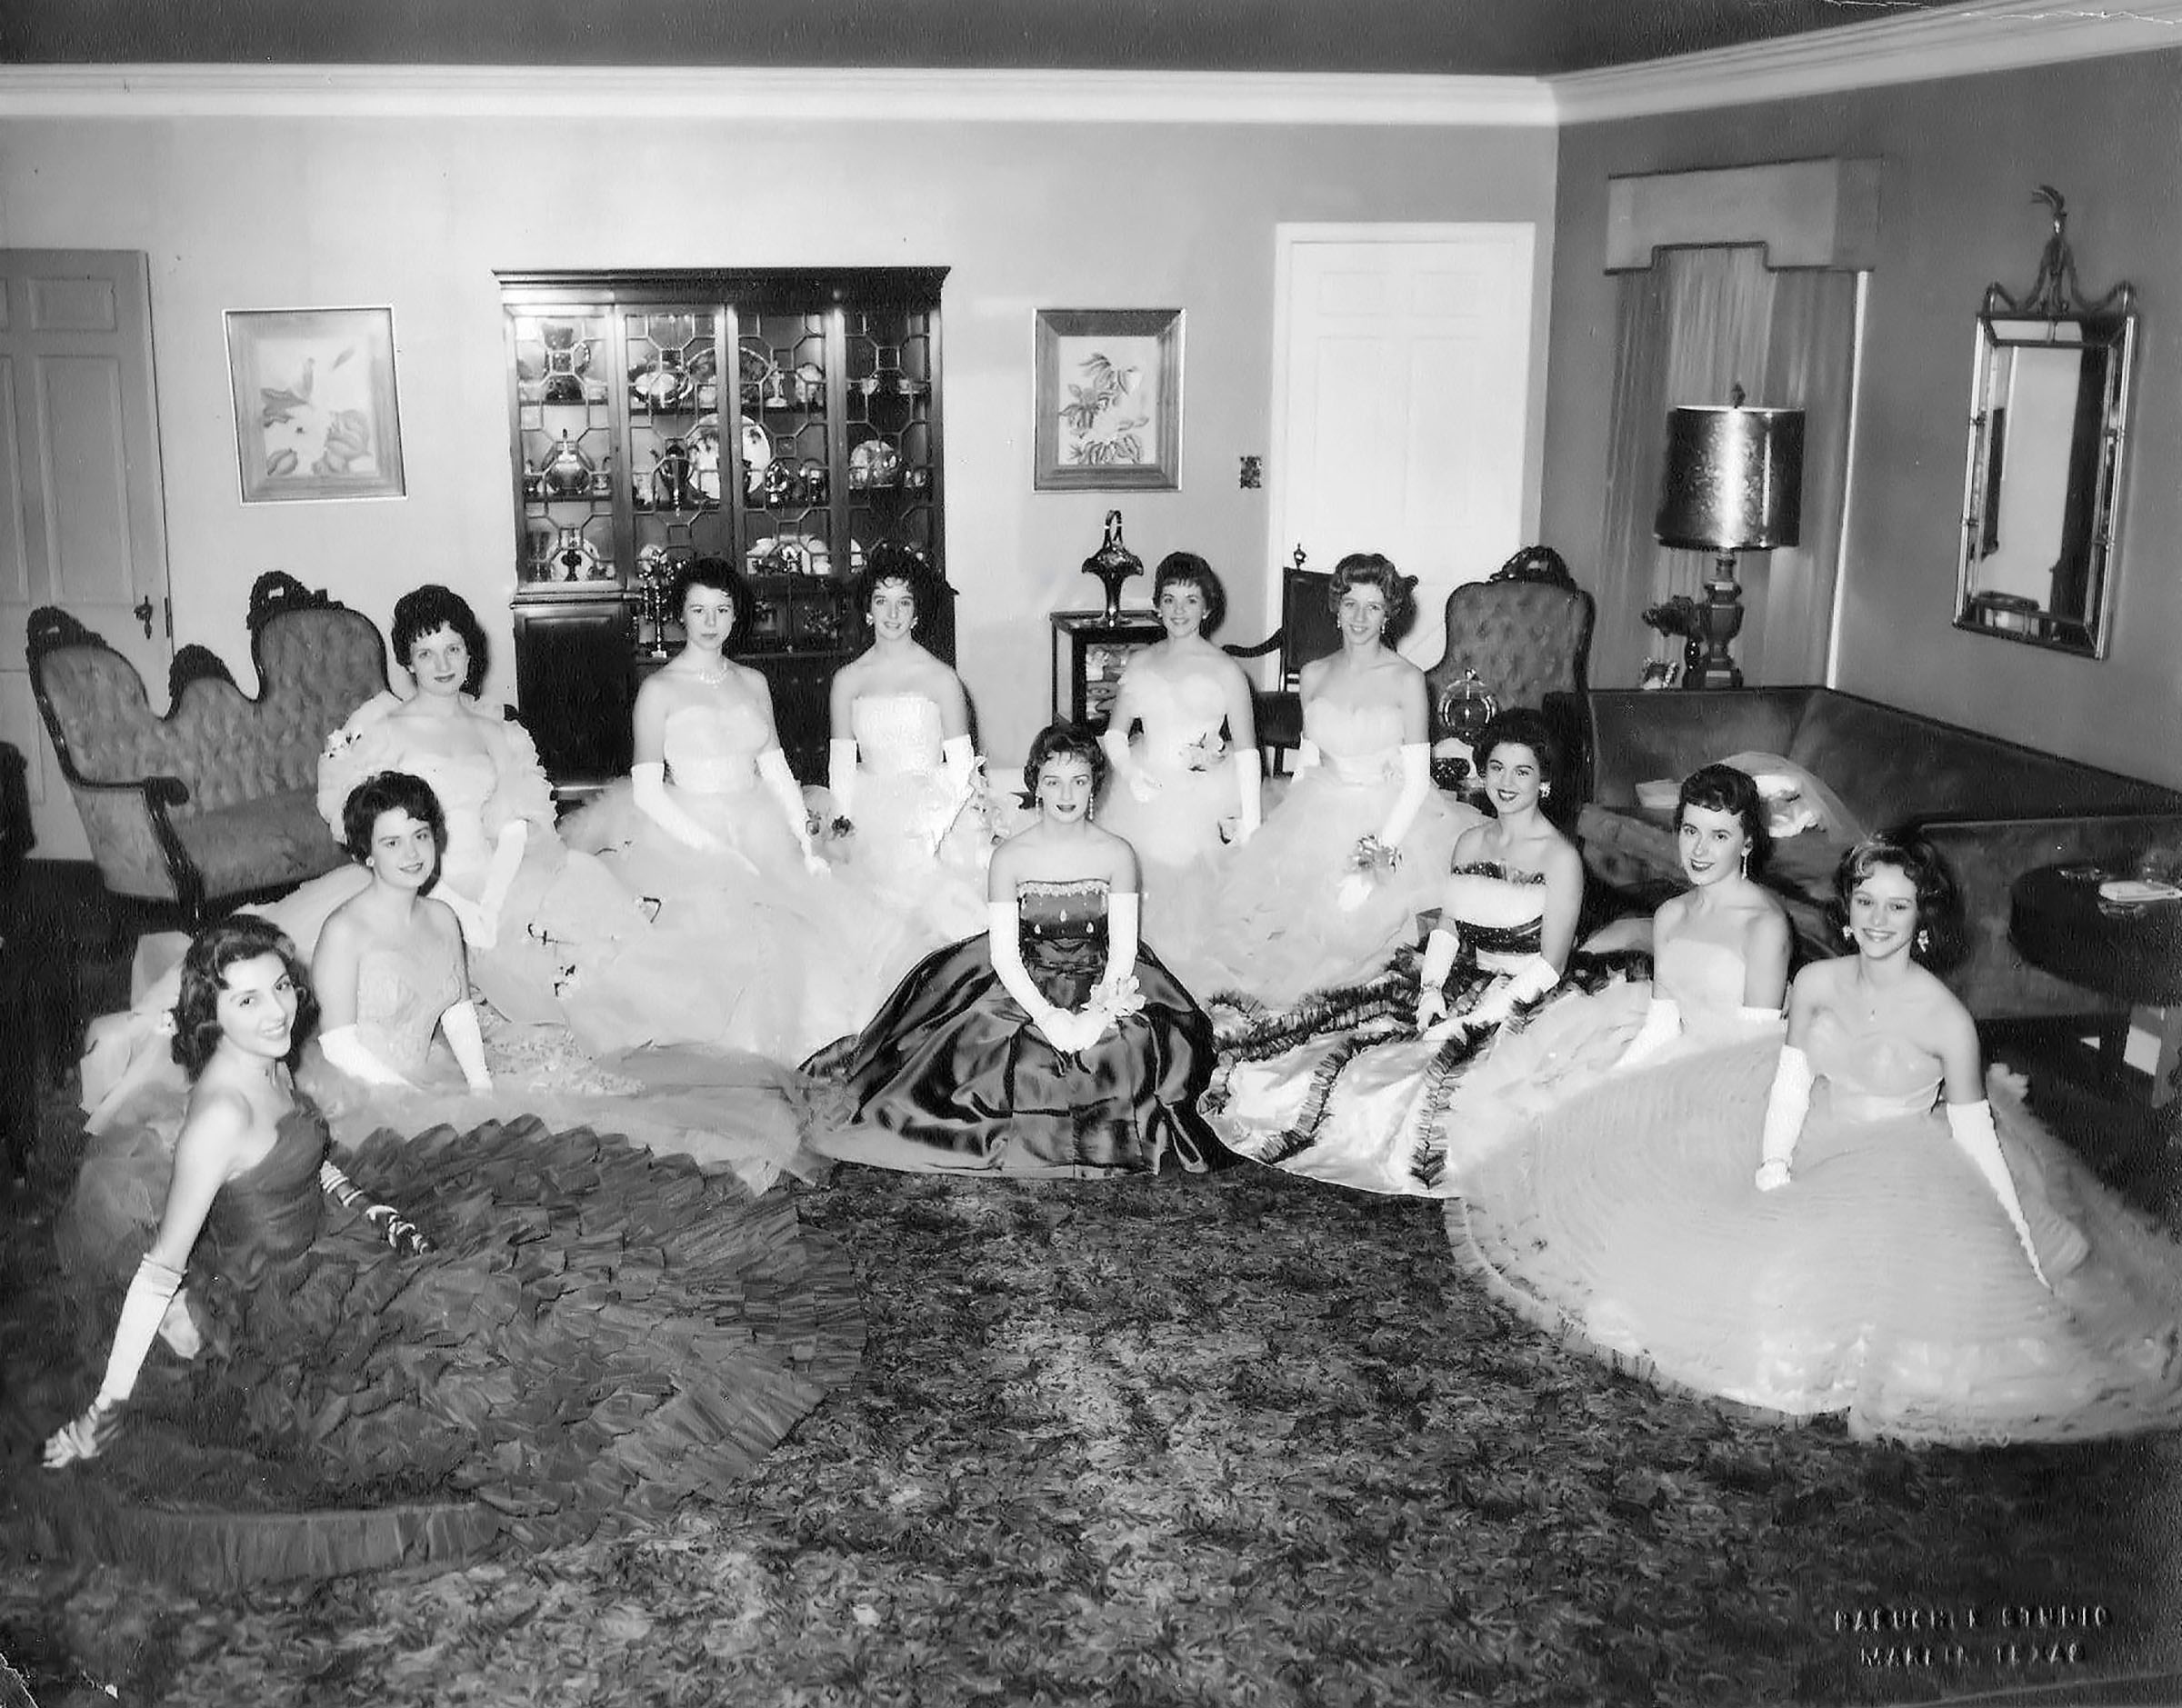 Eleven women in elegant dresses pose for photo in living room